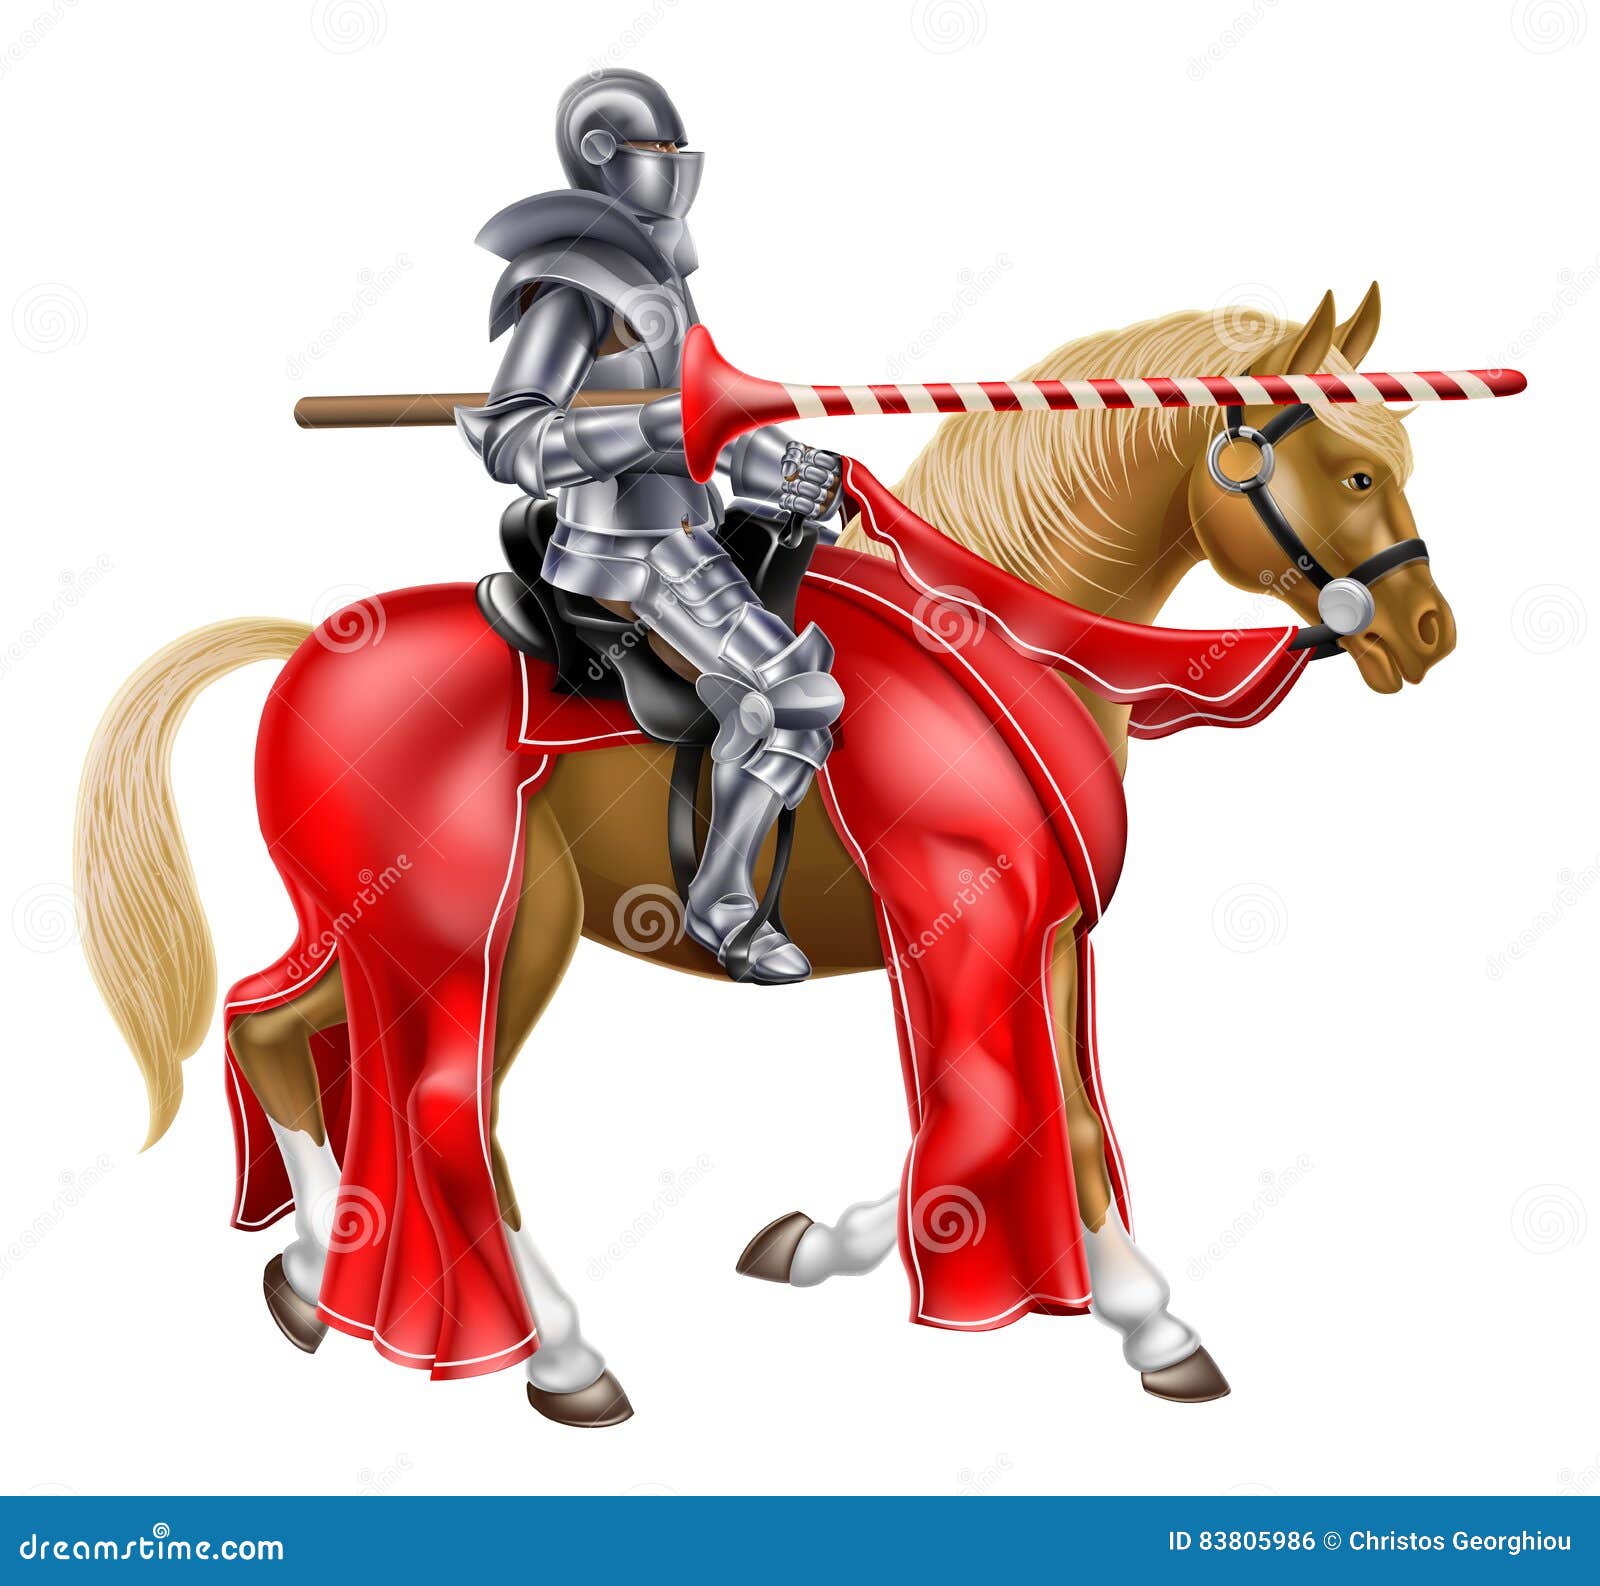 Medieval Lance Knight on Horse Stock Vector - Illustration of knight